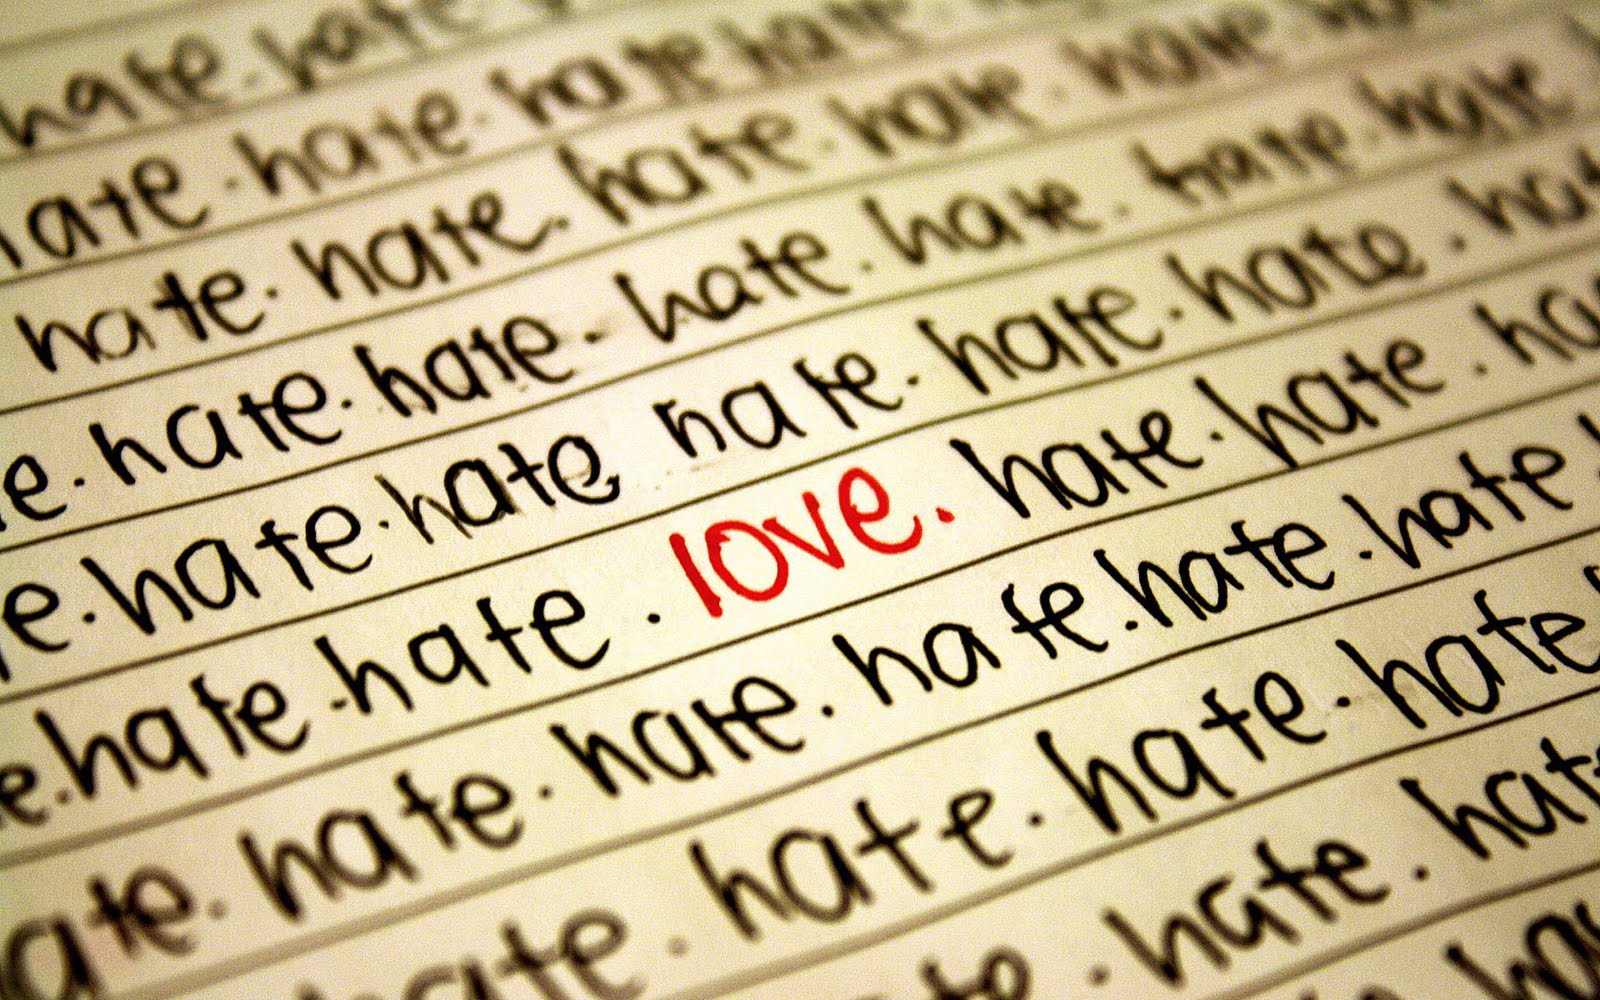 https://blogger.googleusercontent.com/img/b/R29vZ2xl/AVvXsEjMOzdmC5S7Mb9hwKILkT2SlVjhYwUNTCGBFUa0Joh9BprIbt07DouJMrCXXcQhDNoWfsG2Wh9yf6WmUe46rP6DmkY1WIKjlk4GQN6BWH_JCW_62Bsvwl99350F69SgXLRlAOLruuBQAiA/s1600/Word+Love+Hate+HD+Wallpaper+-+LoveWallpapers4u.Blogspot.Com.jpg